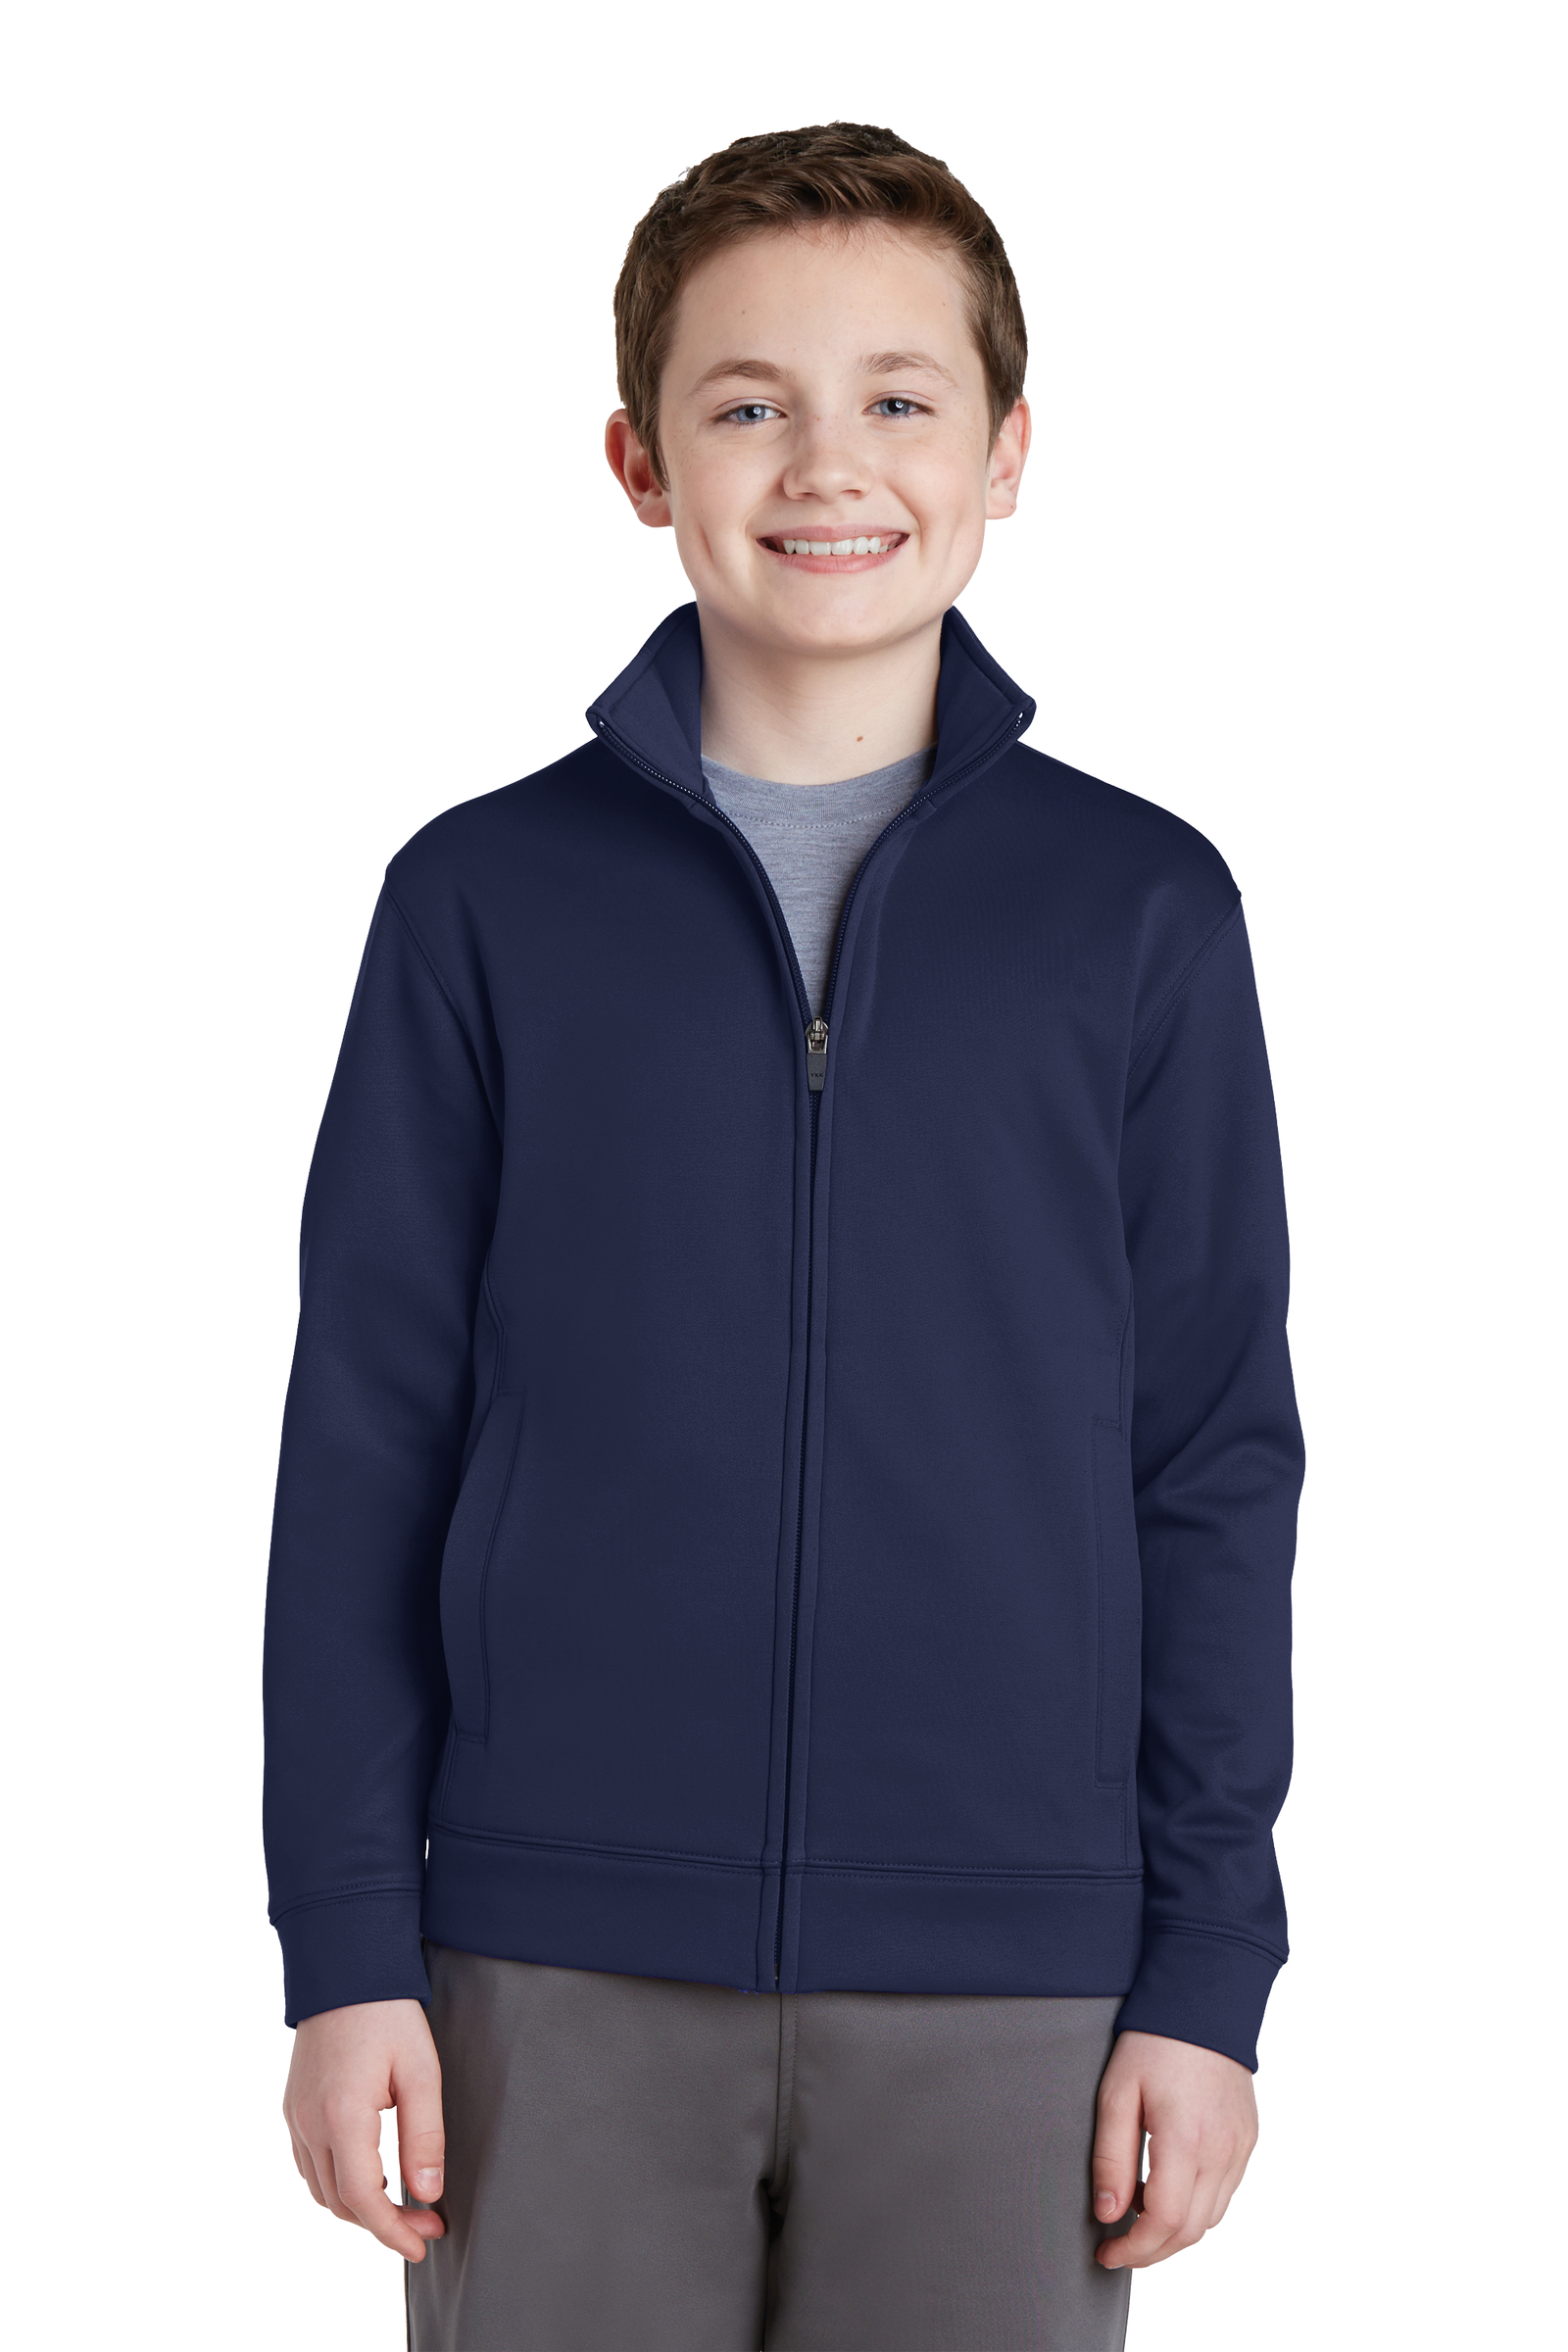 Sport-Tek Embroidered Youth Sport-Wick Fleece Full-Zip Jacket